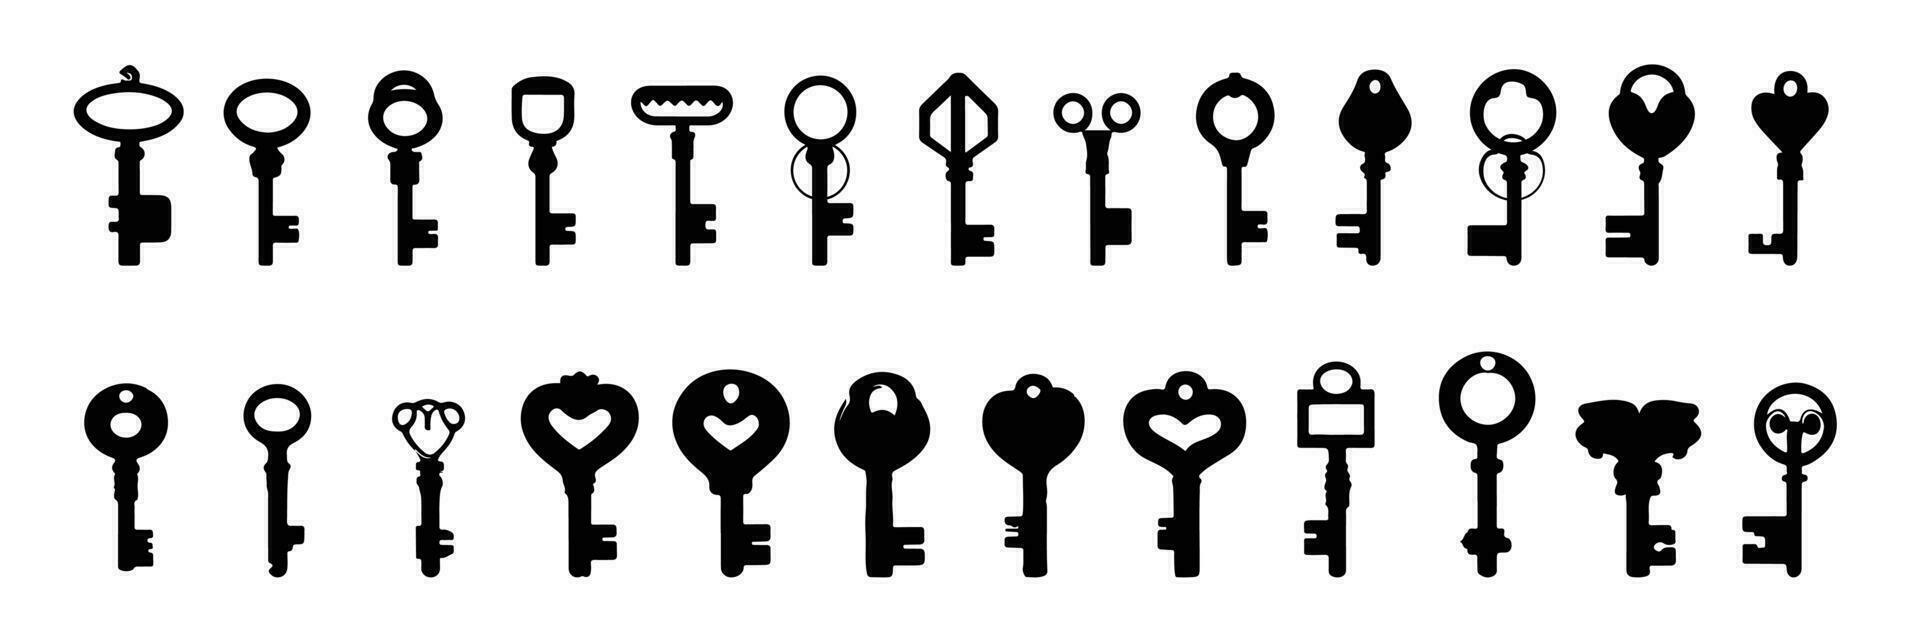 Big collection of silhouette of keys. Vintage modern keys, decorative old keys. Vector illustraiton.